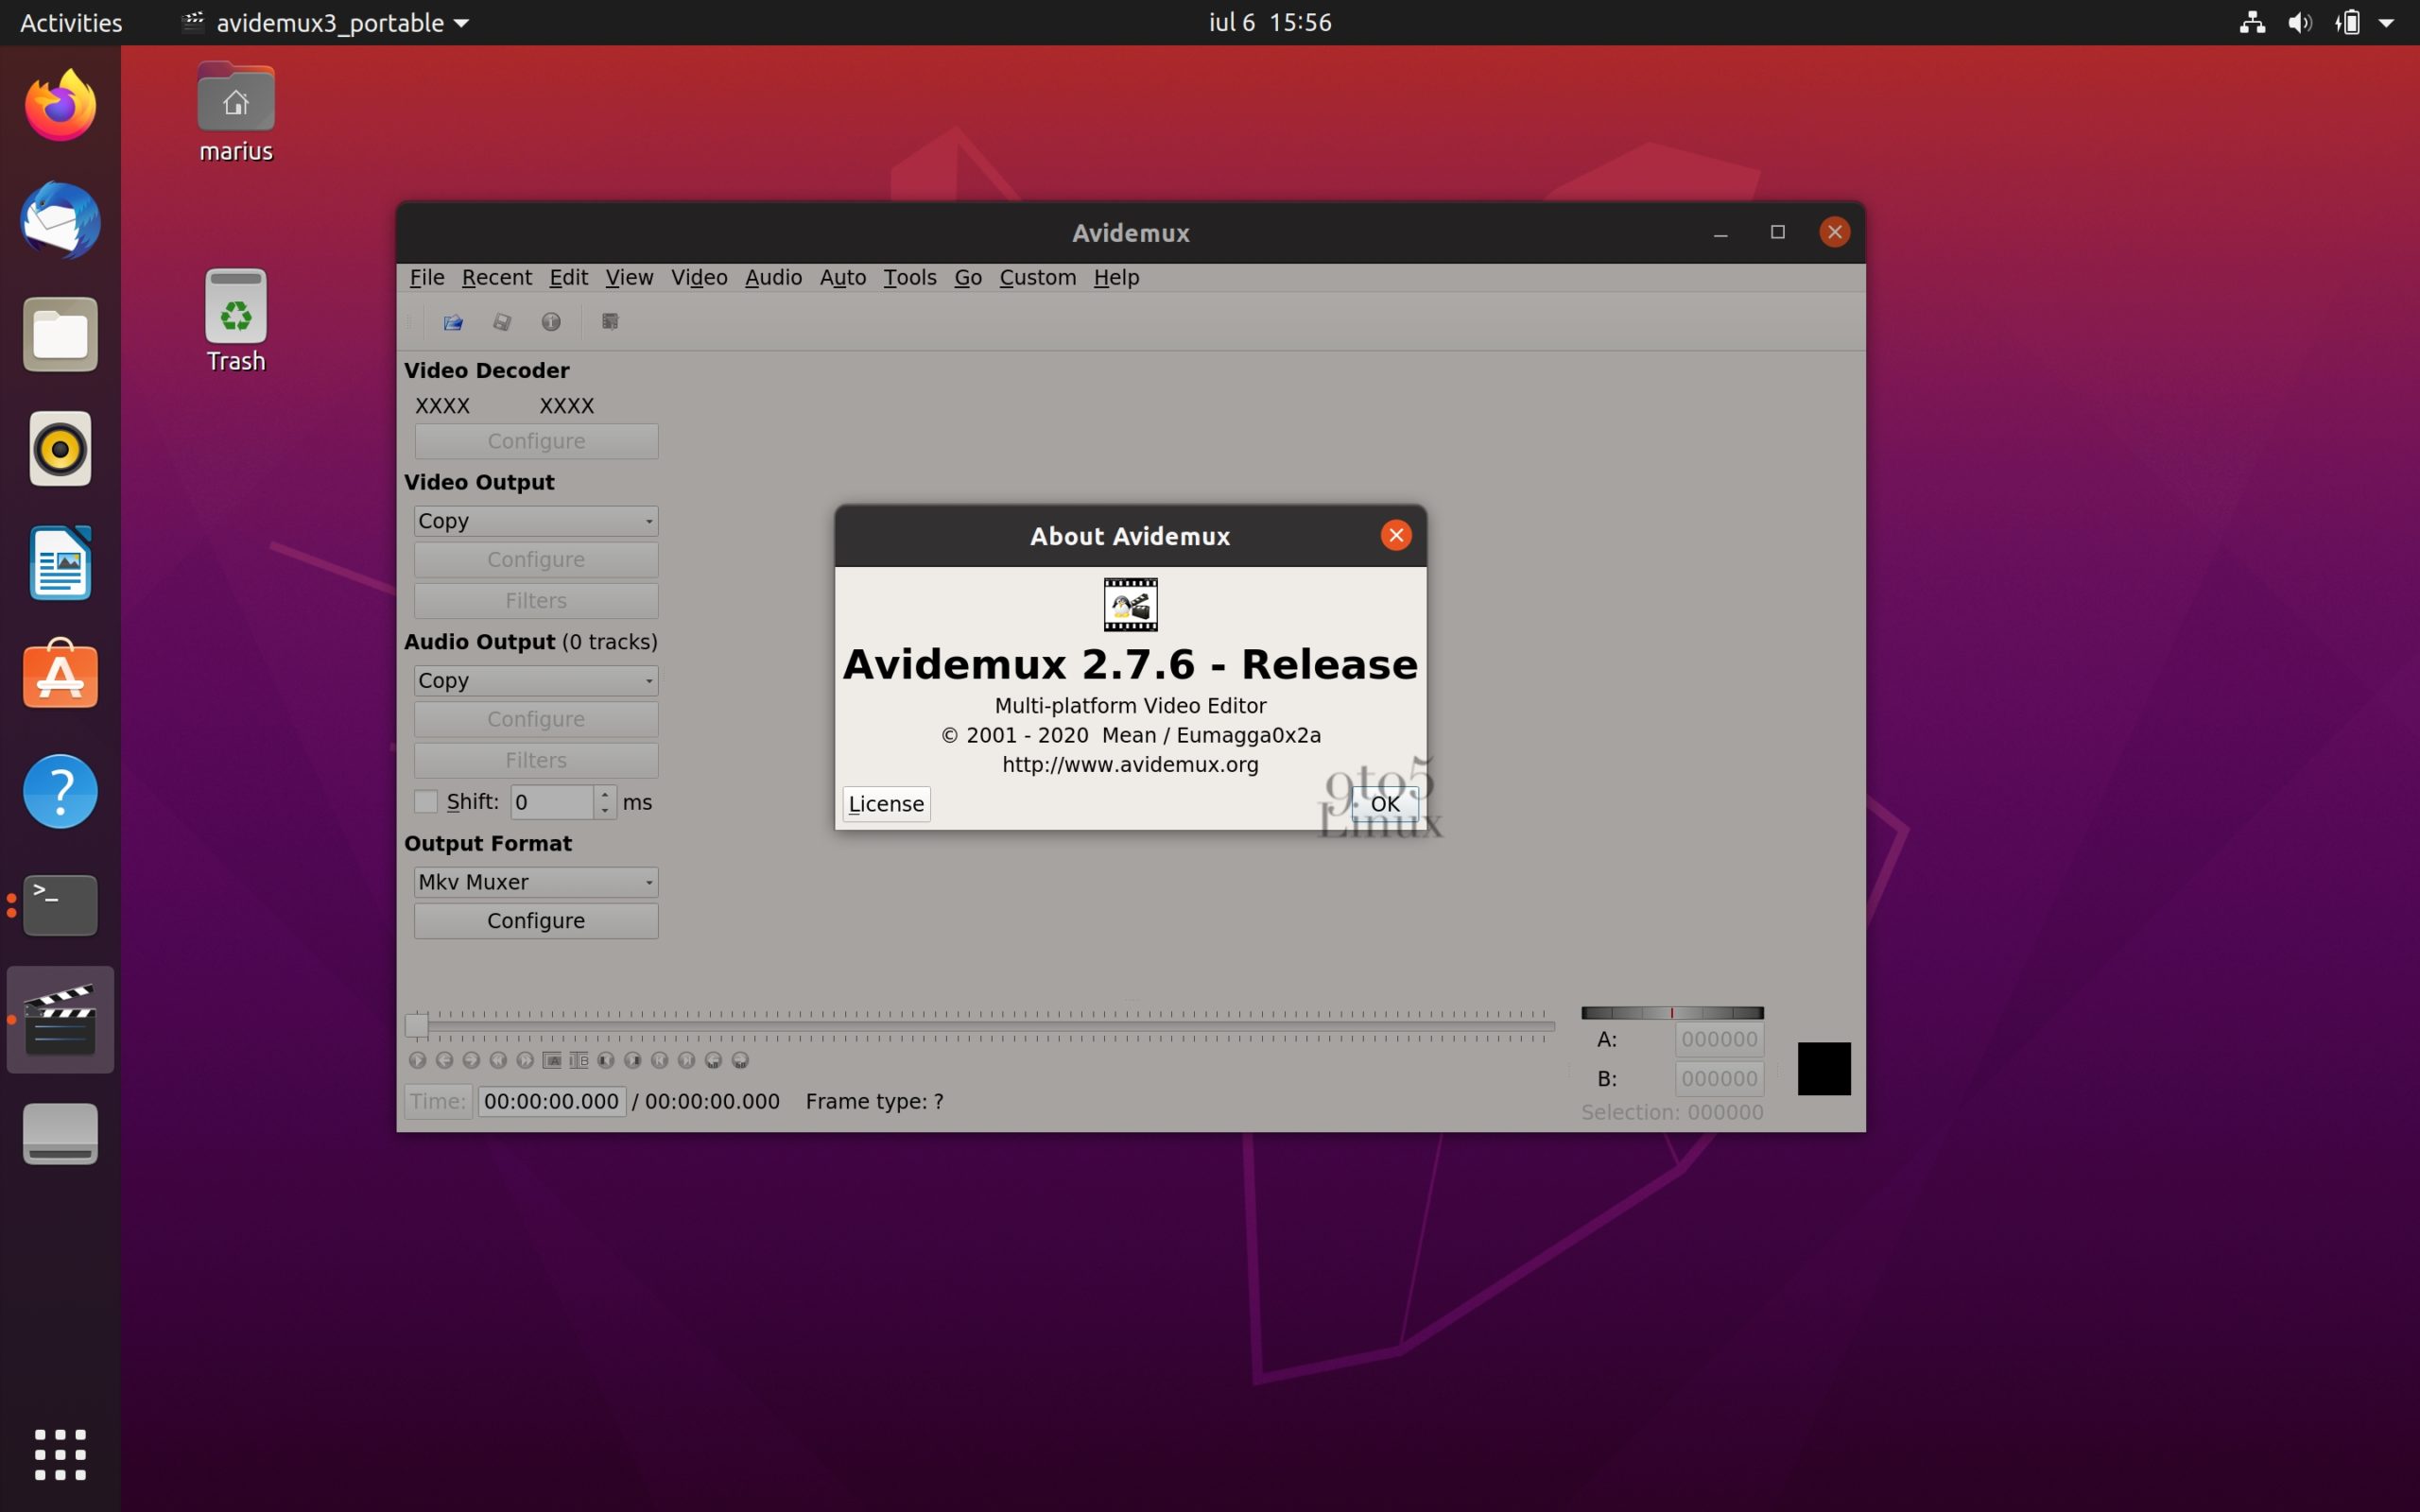 Avidemux 2.7.6 Free Video Editor Released with New AV1 Decoder, Many Changes